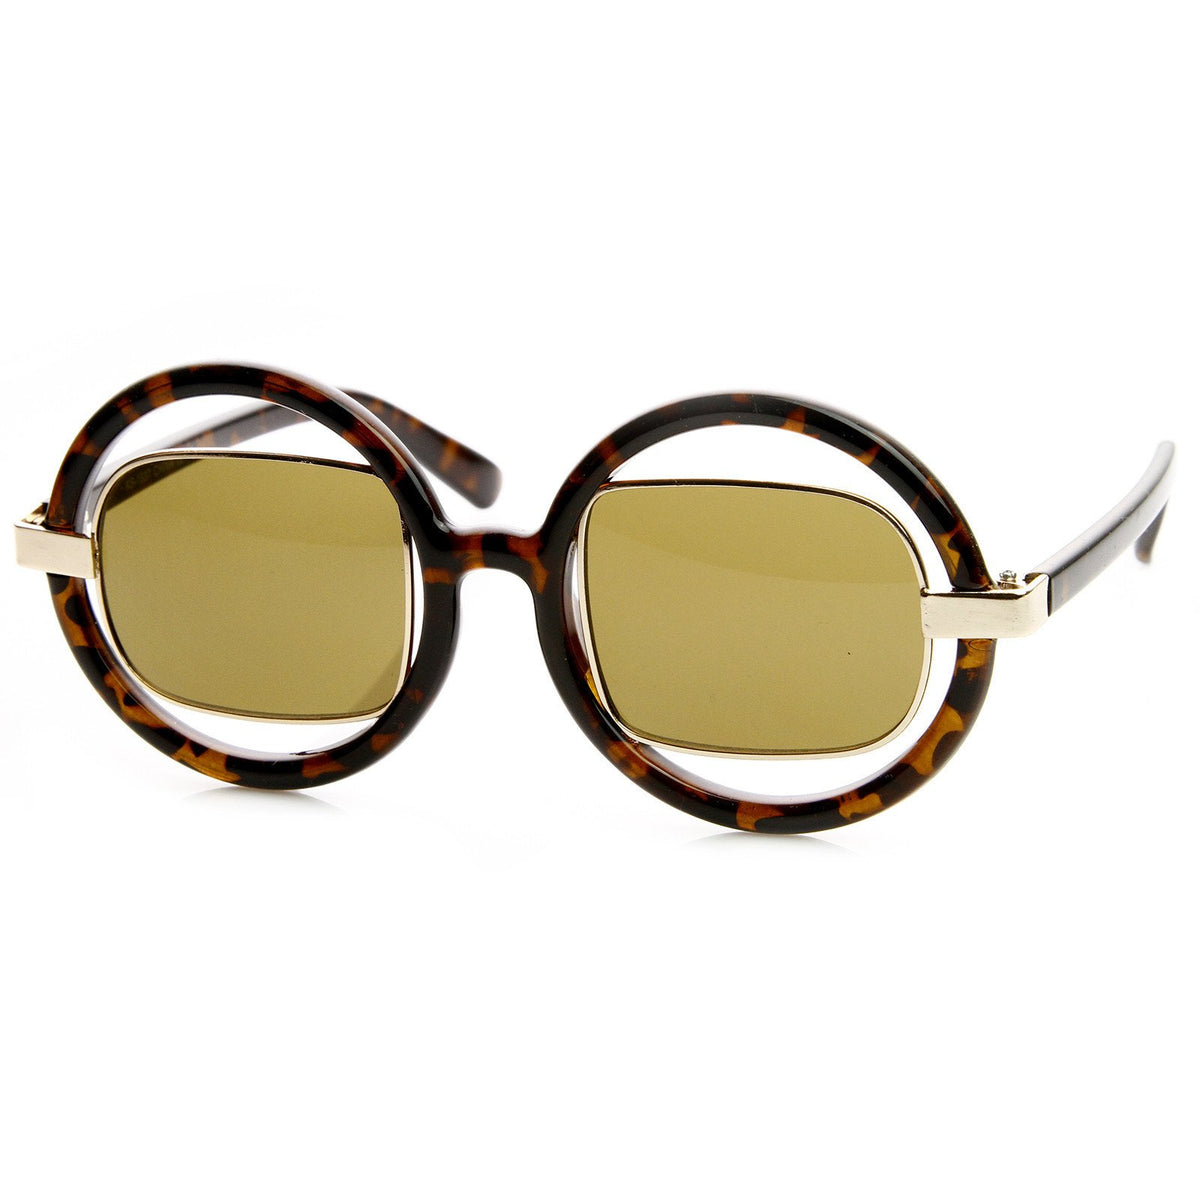 Designer Fashion Round Square Lens Cut Out Sunglasses Zerouv 